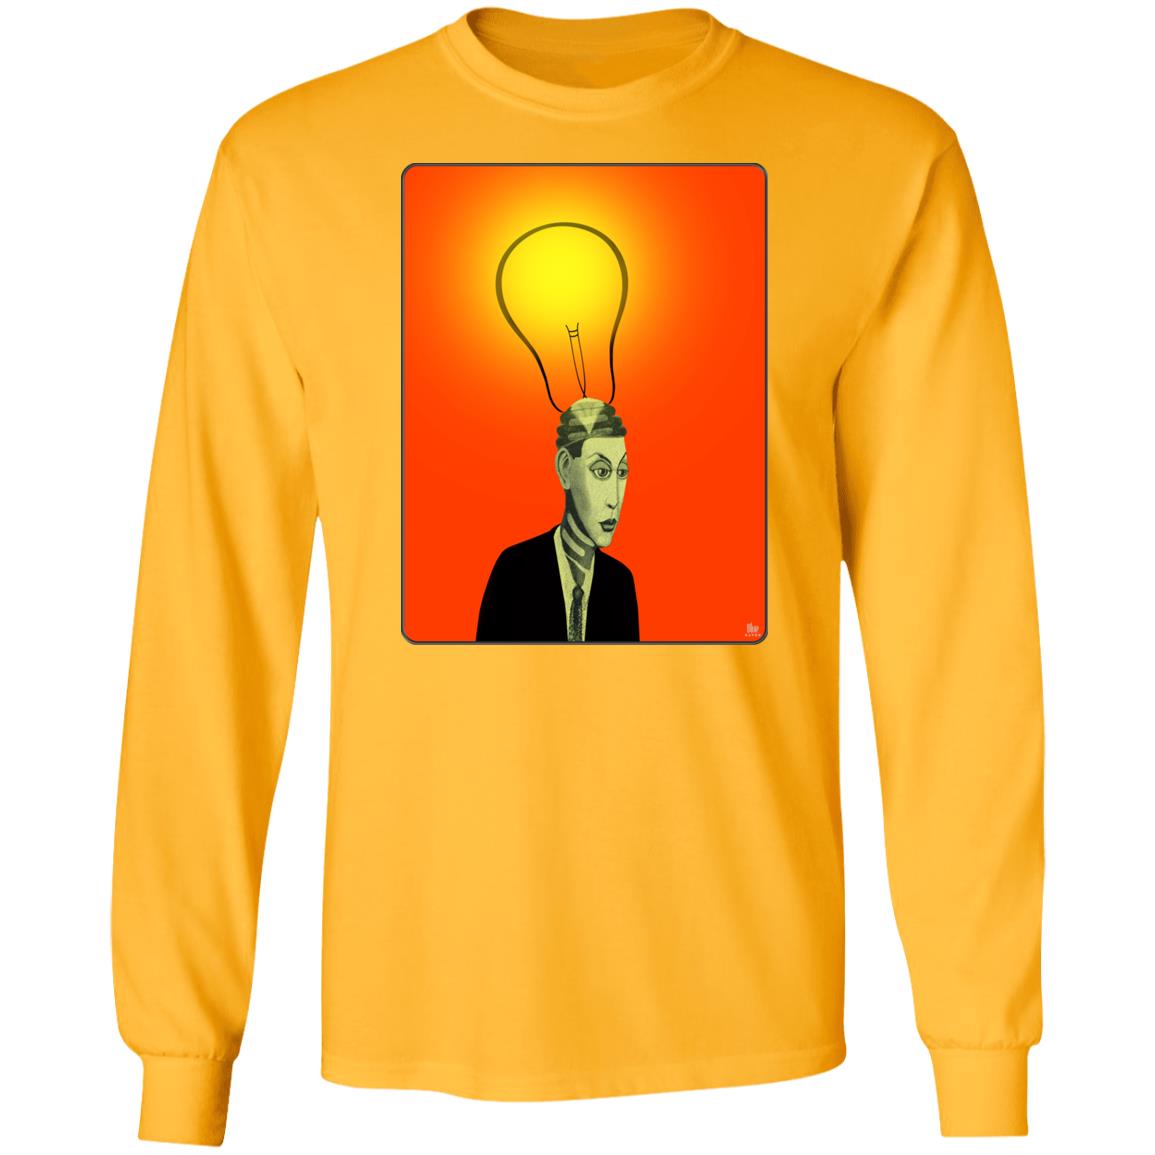 Bright Idea - Men's Long Sleeve T-Shirt